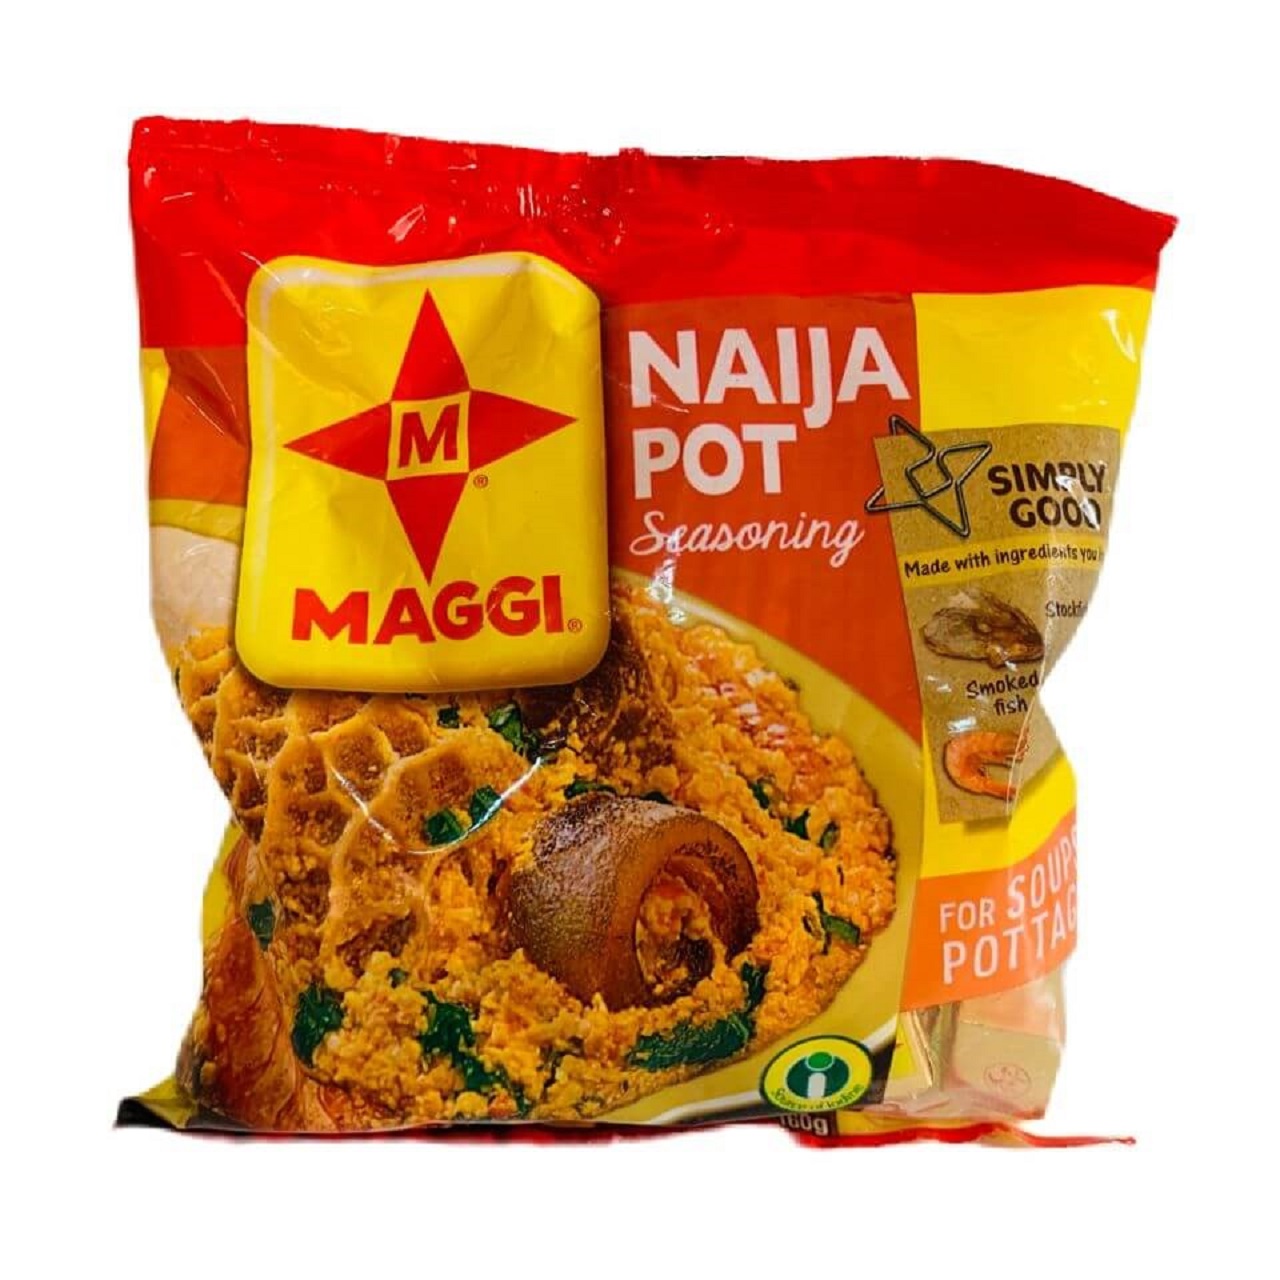 A sachet of Maggi Naija Pot seasoning cubes